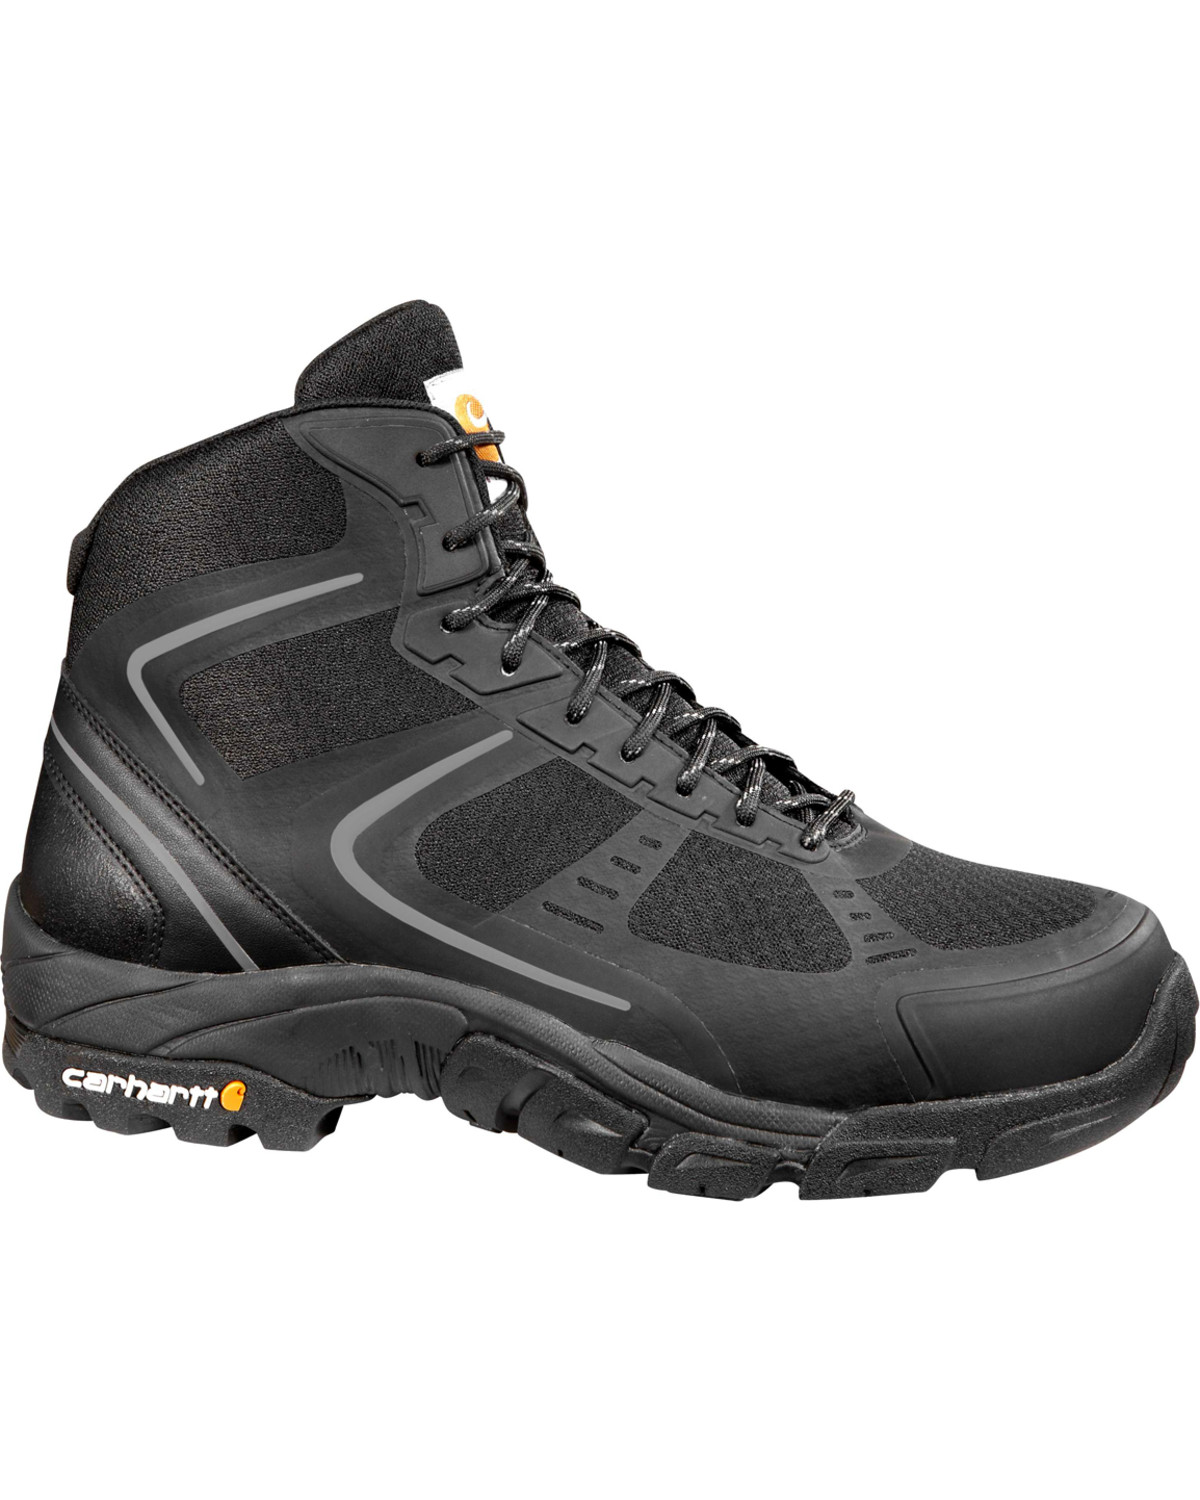 lightweight black hiking boots